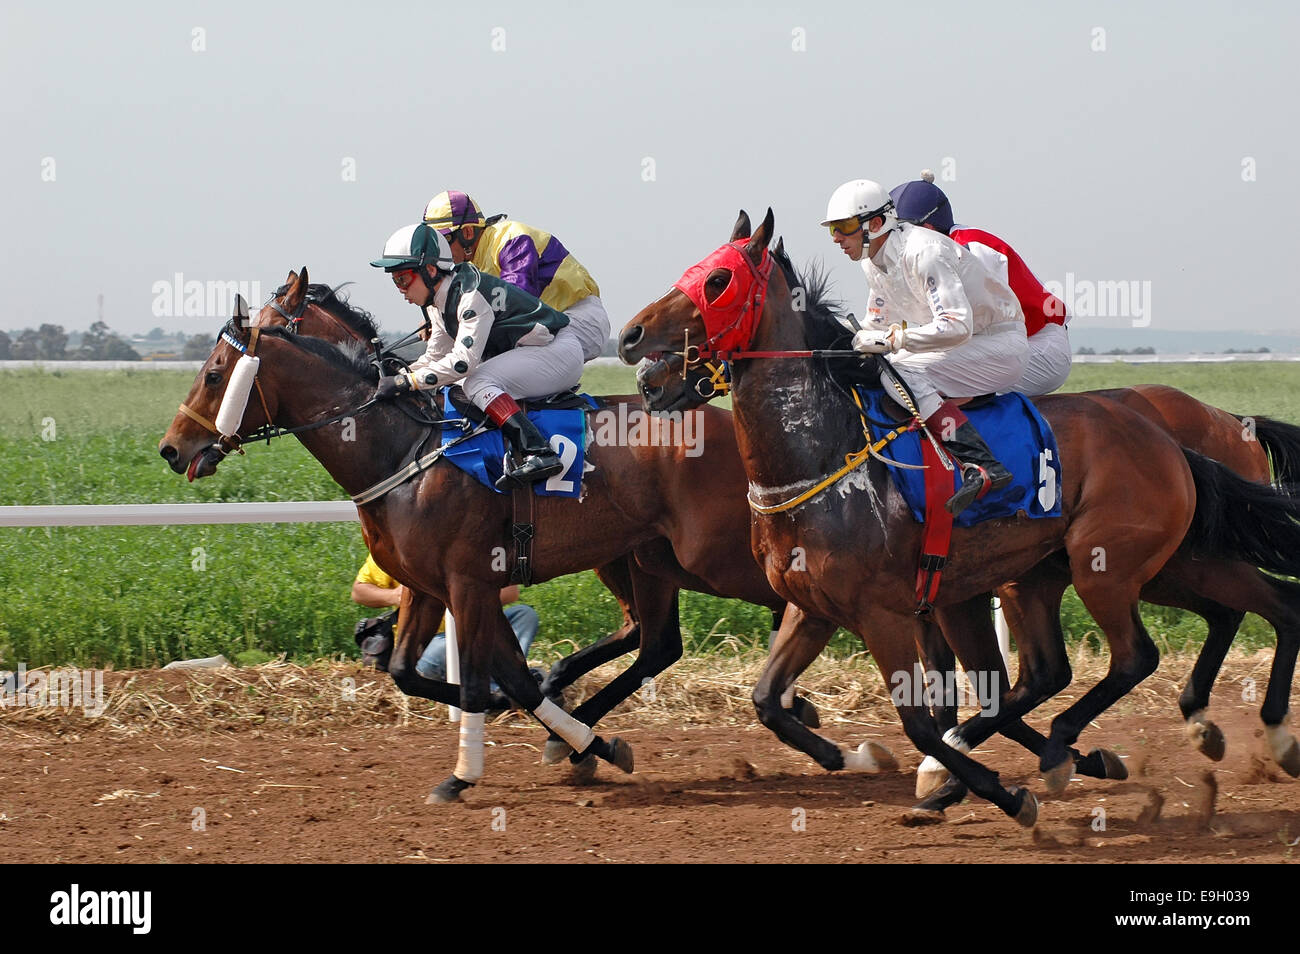 Horse race, Israel Stock Photo